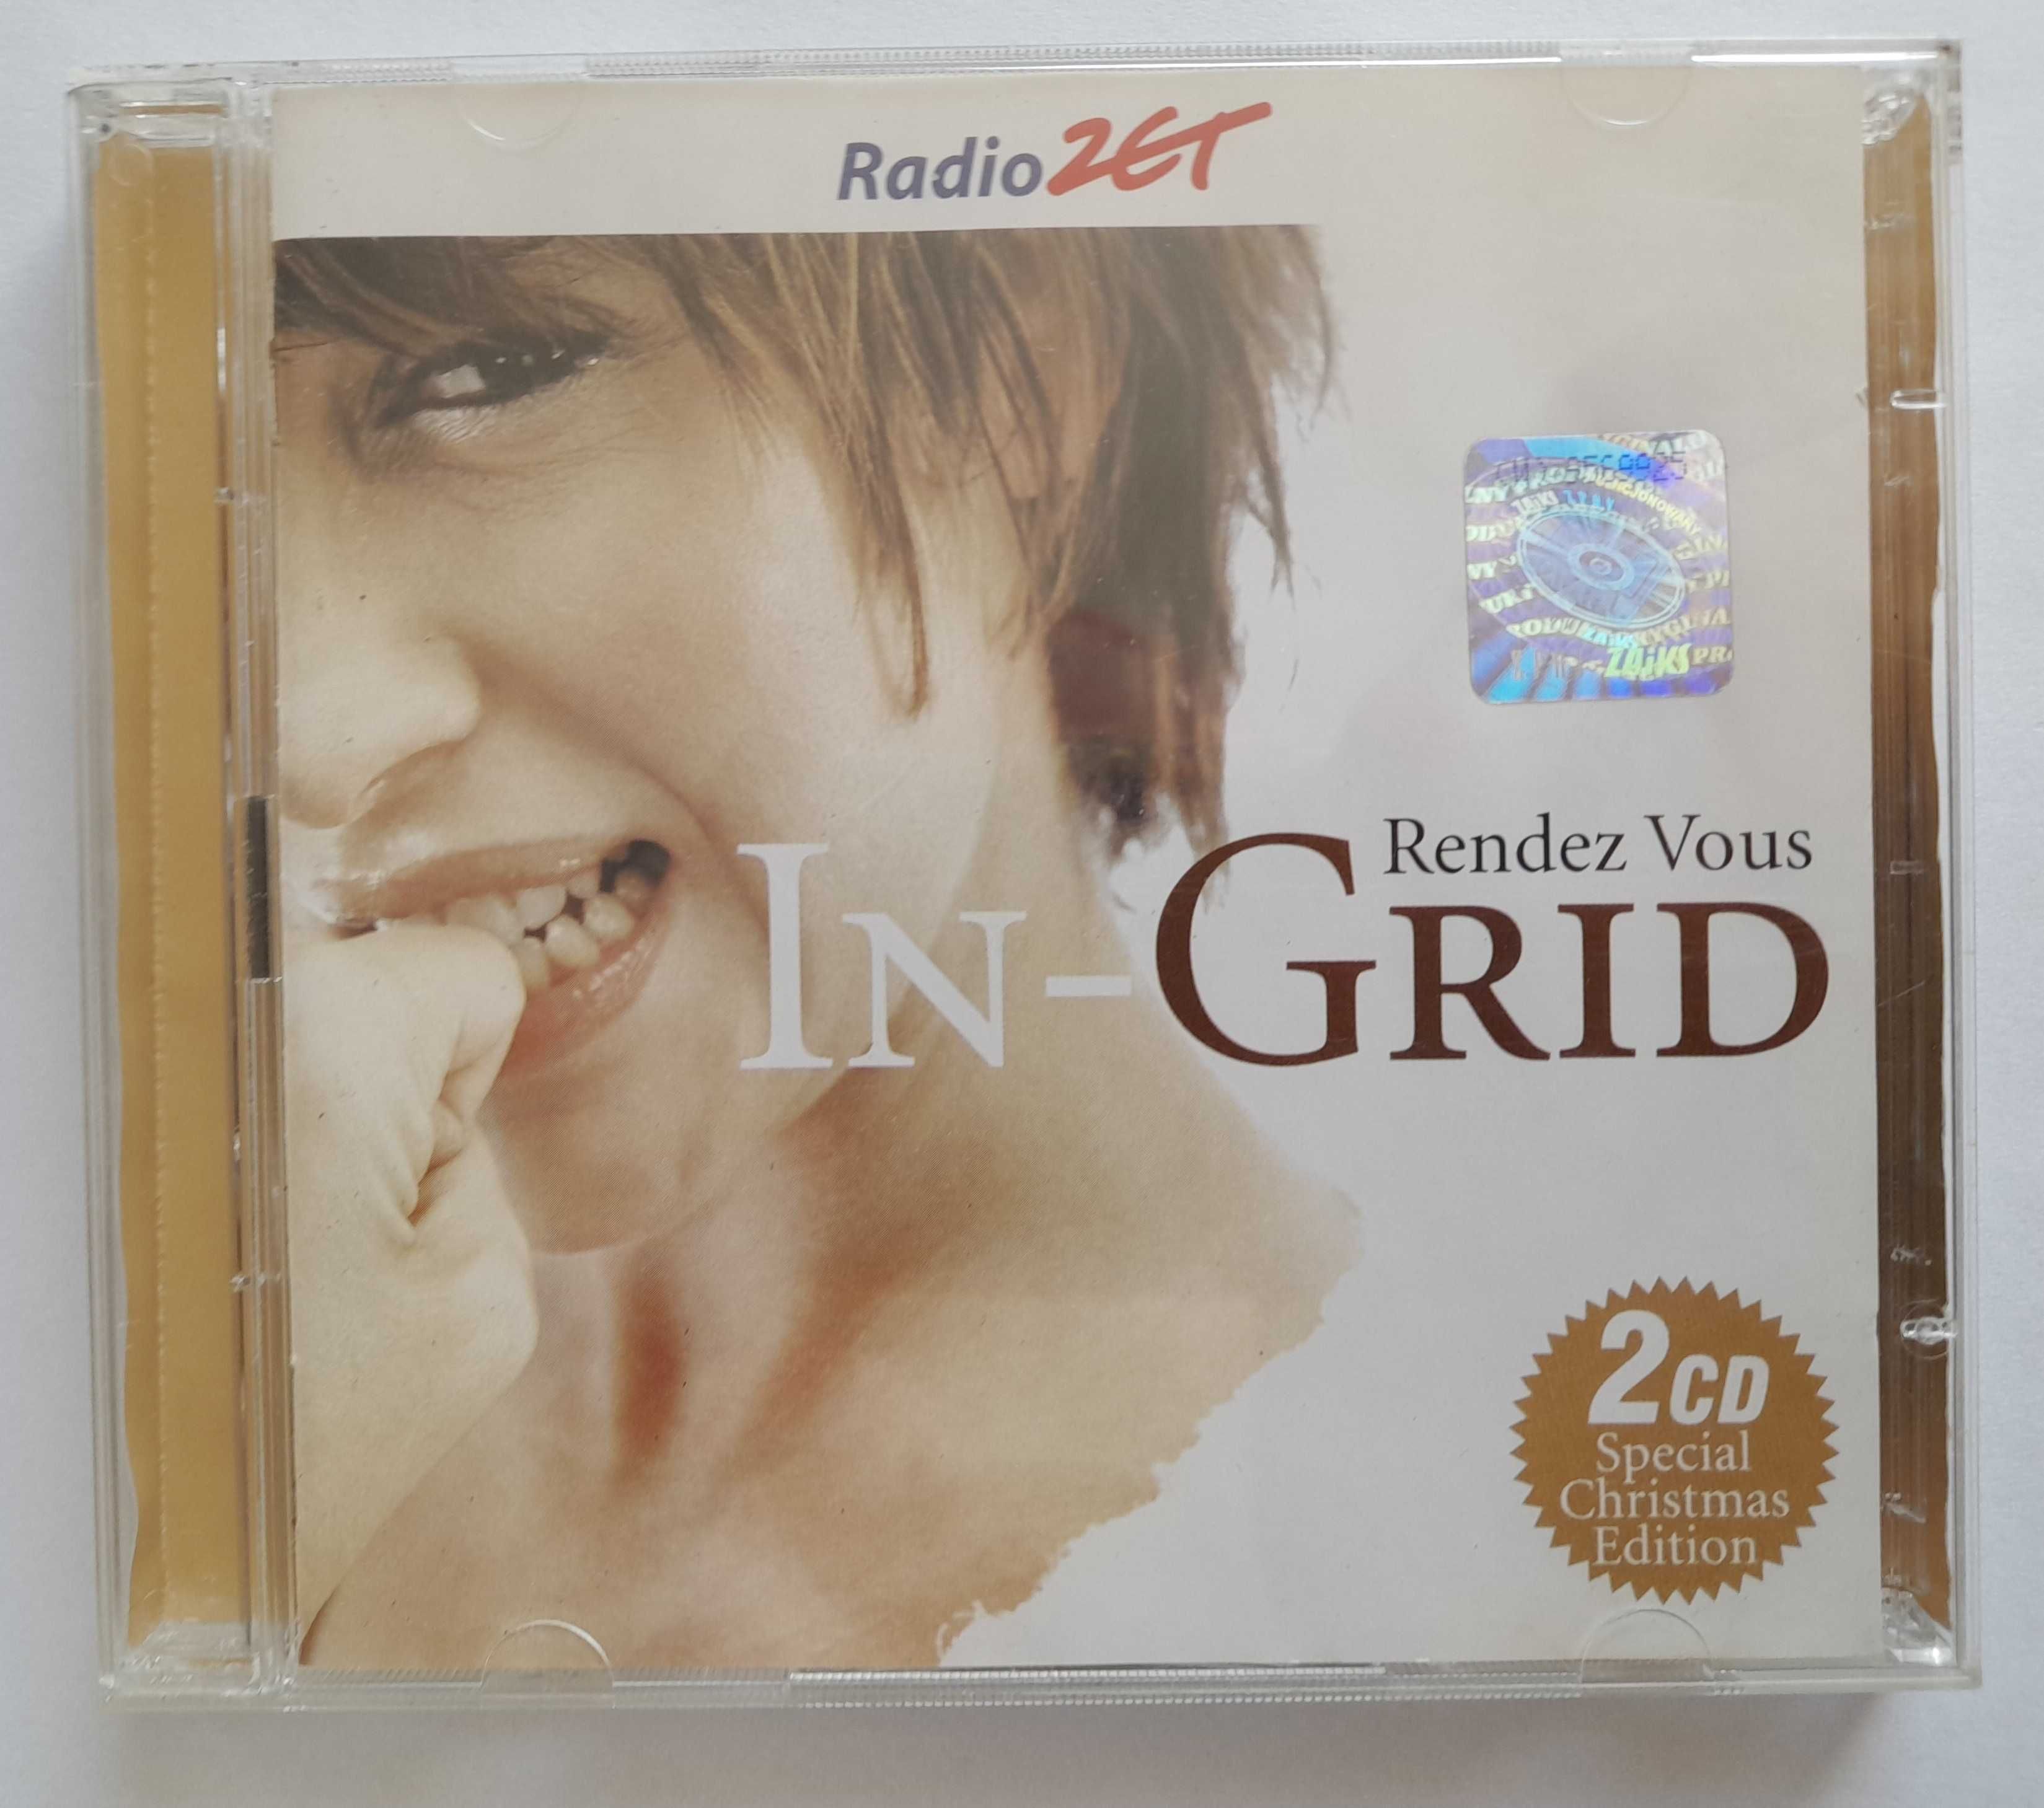 Rendez-Vous - In-Grid 2xCD